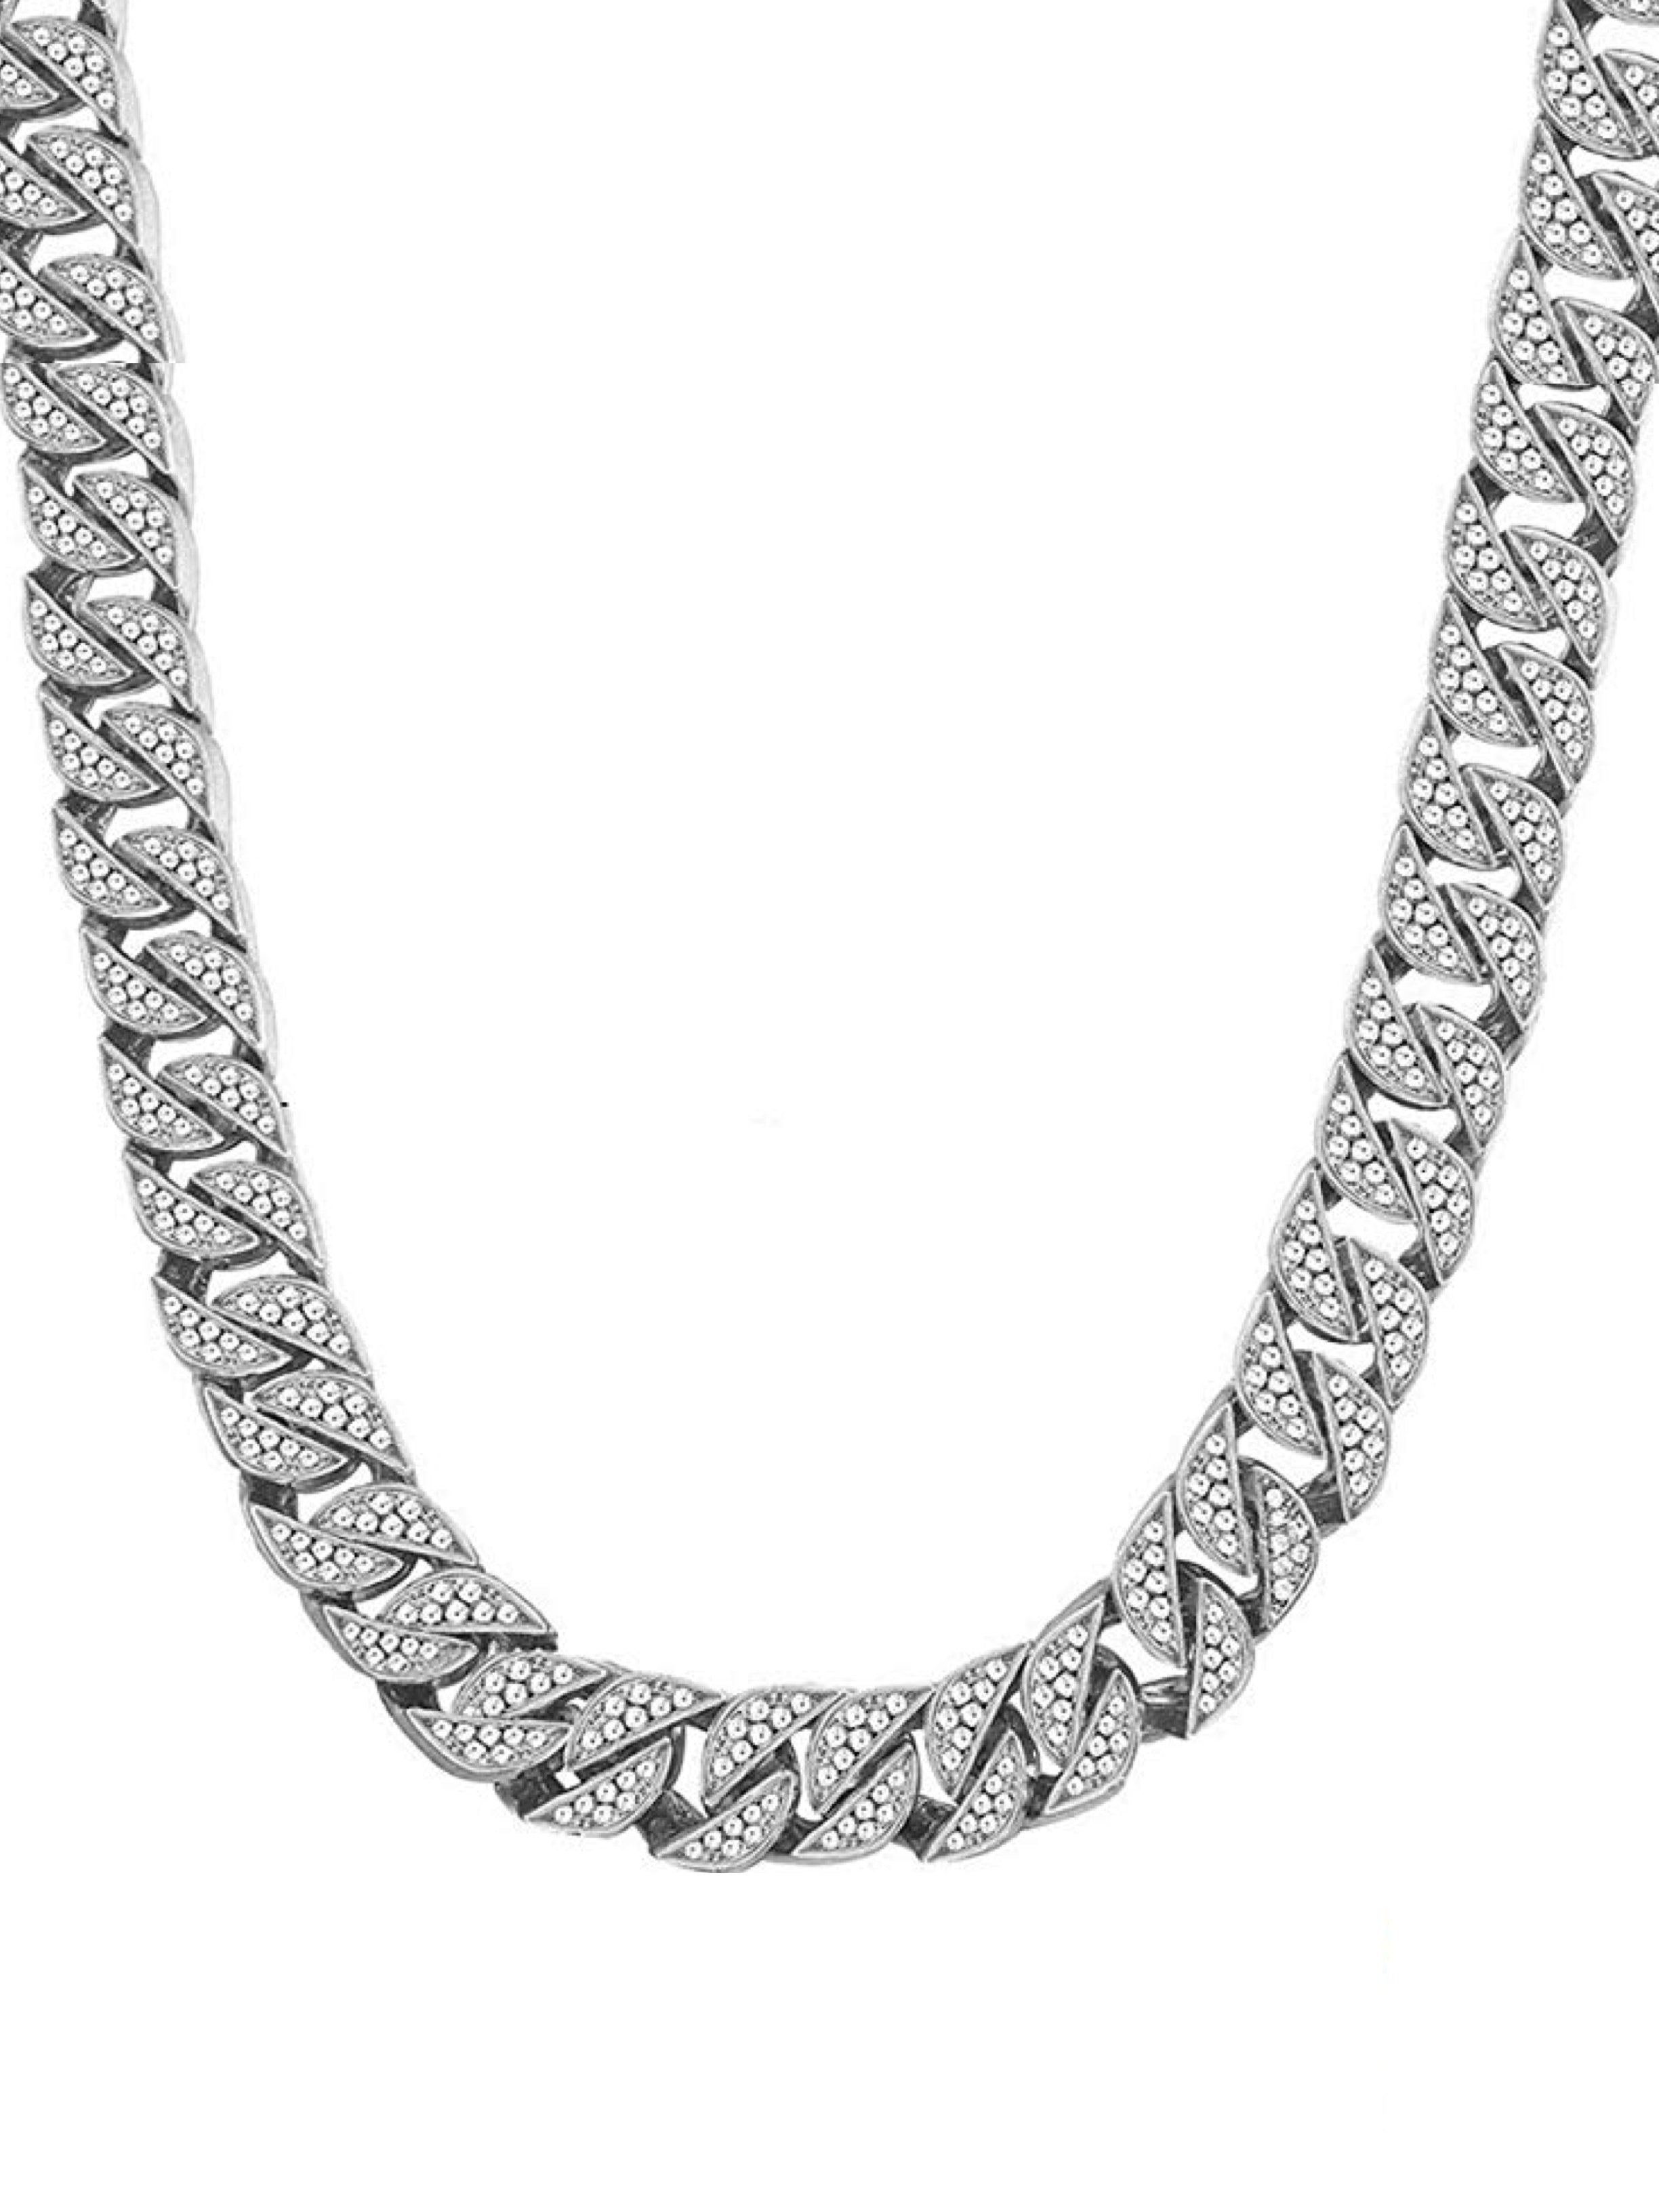 Silver Cz Link Necklace